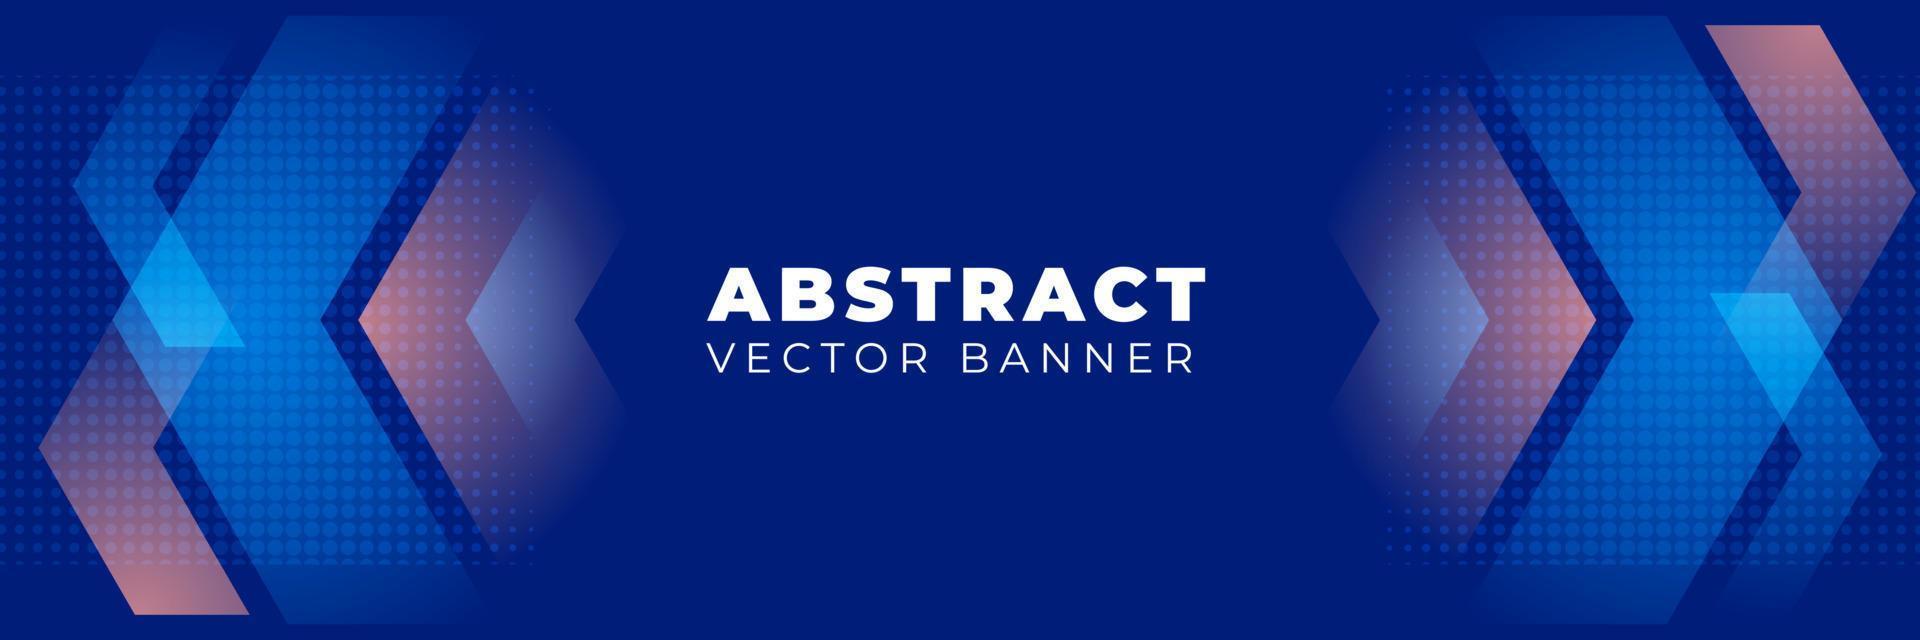 vetor de banner horizontal abstrato de fundo azul, design de modelo com espaço de cópia